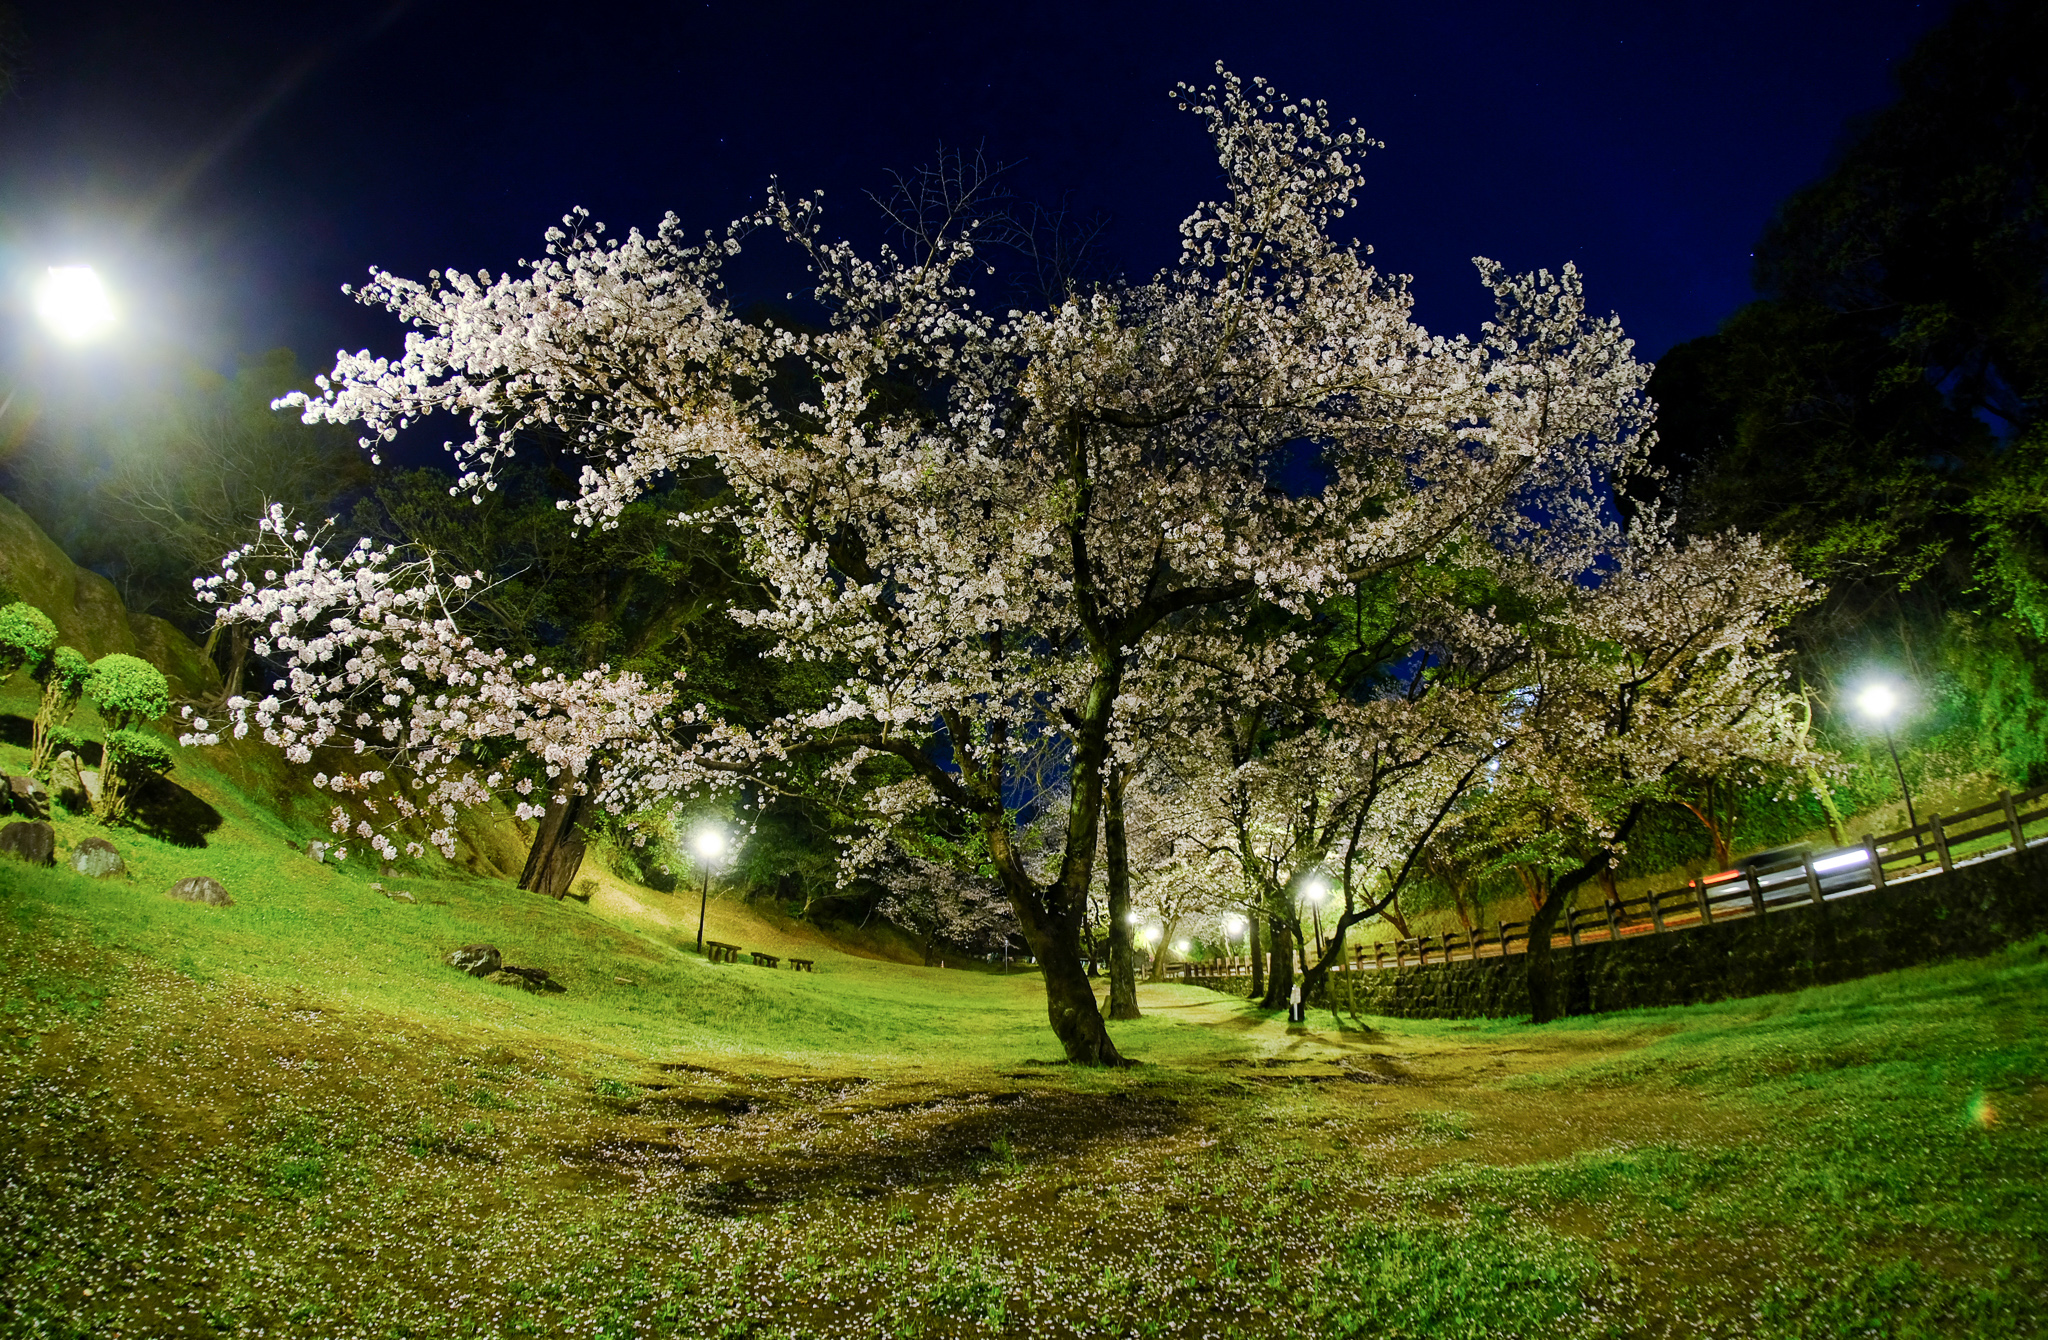 7artisans 7.5mm Ｆ2.8 を使った夜桜の撮影